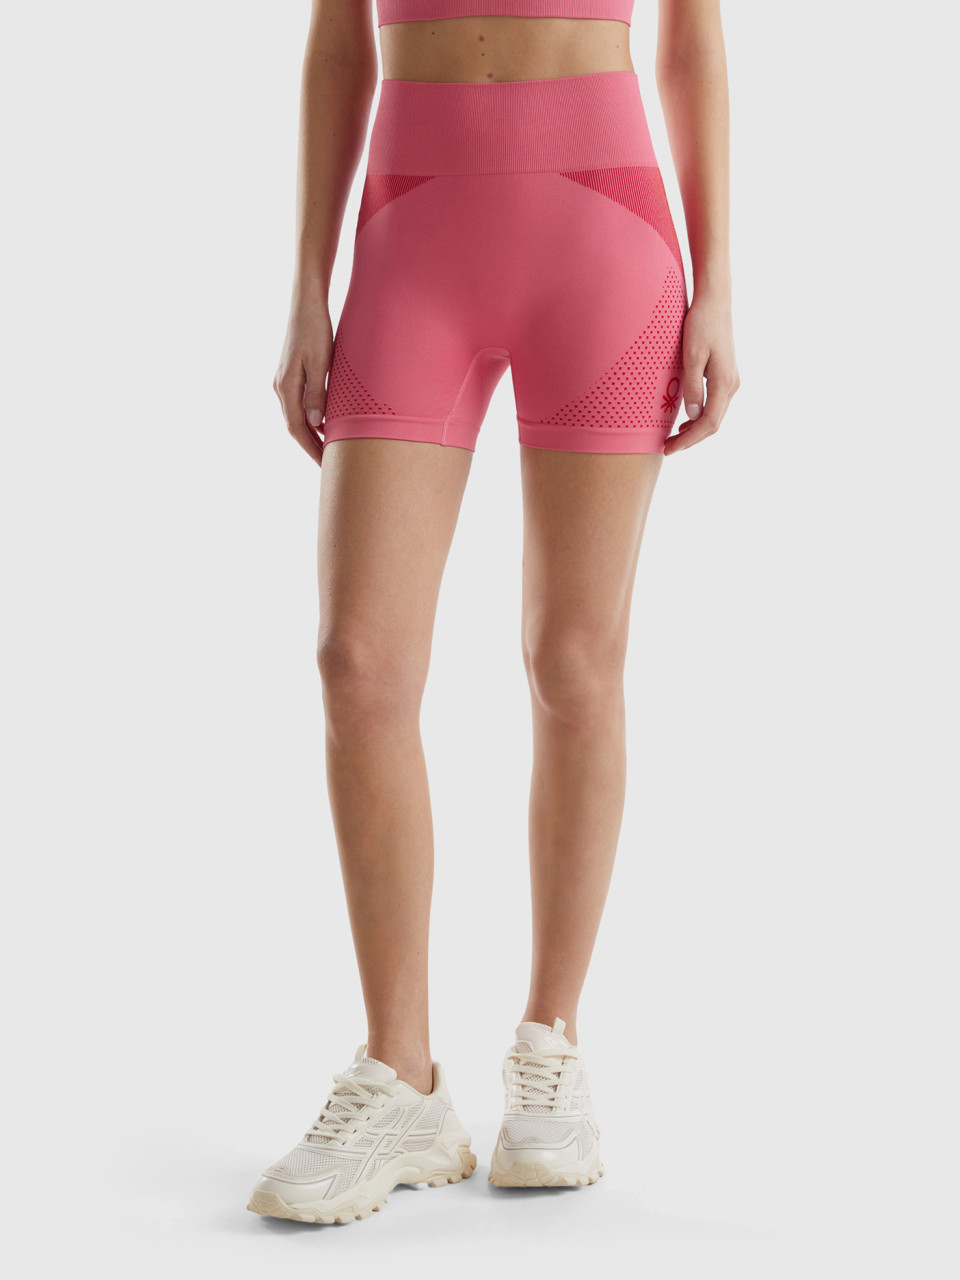 Benetton, Nahtlose Sport-shorts, Pink, female